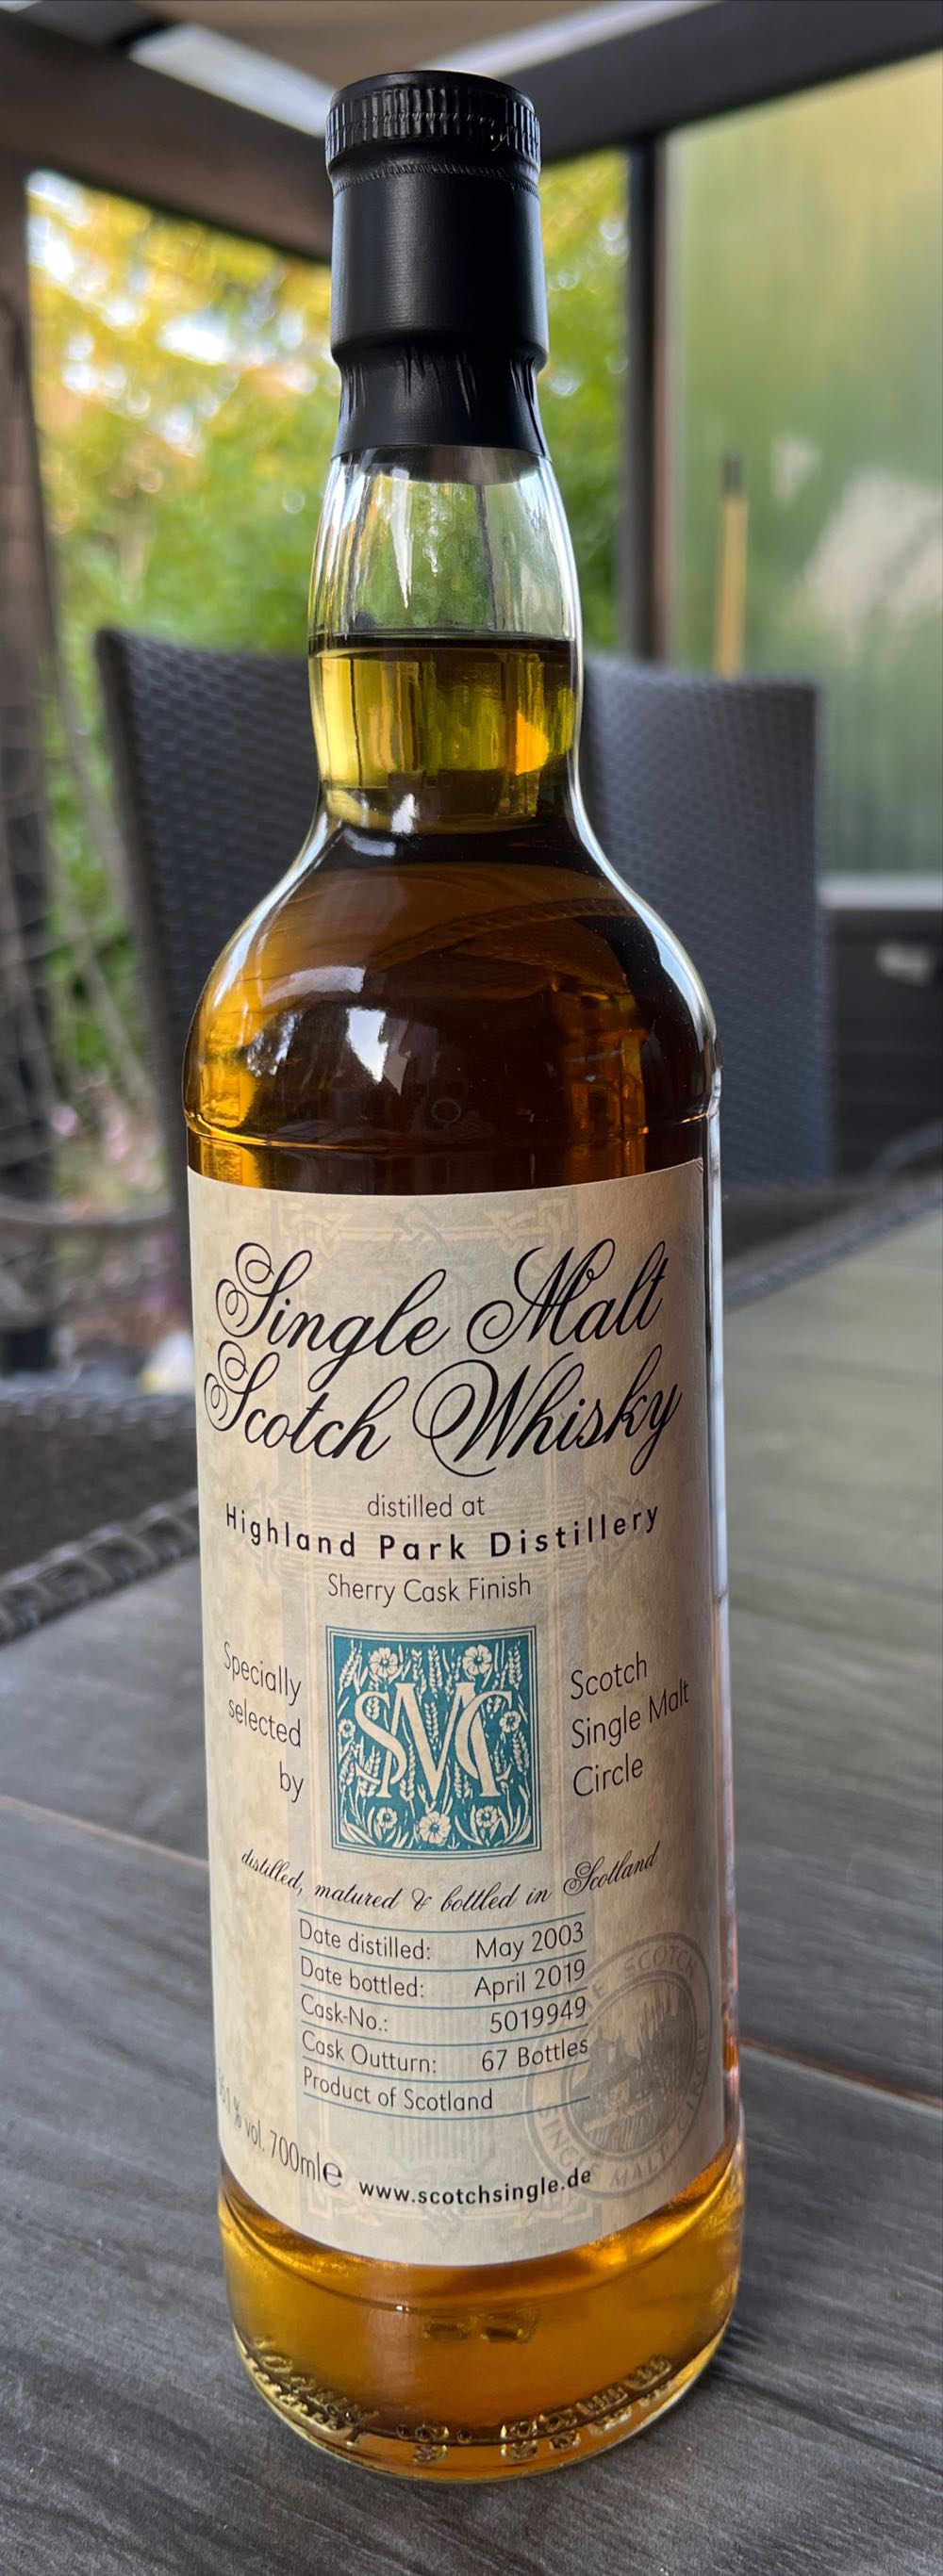 Highland Park 15 Years - Scotch Single Malt Circle (700 mL) alcohol collectible - Main Image 1